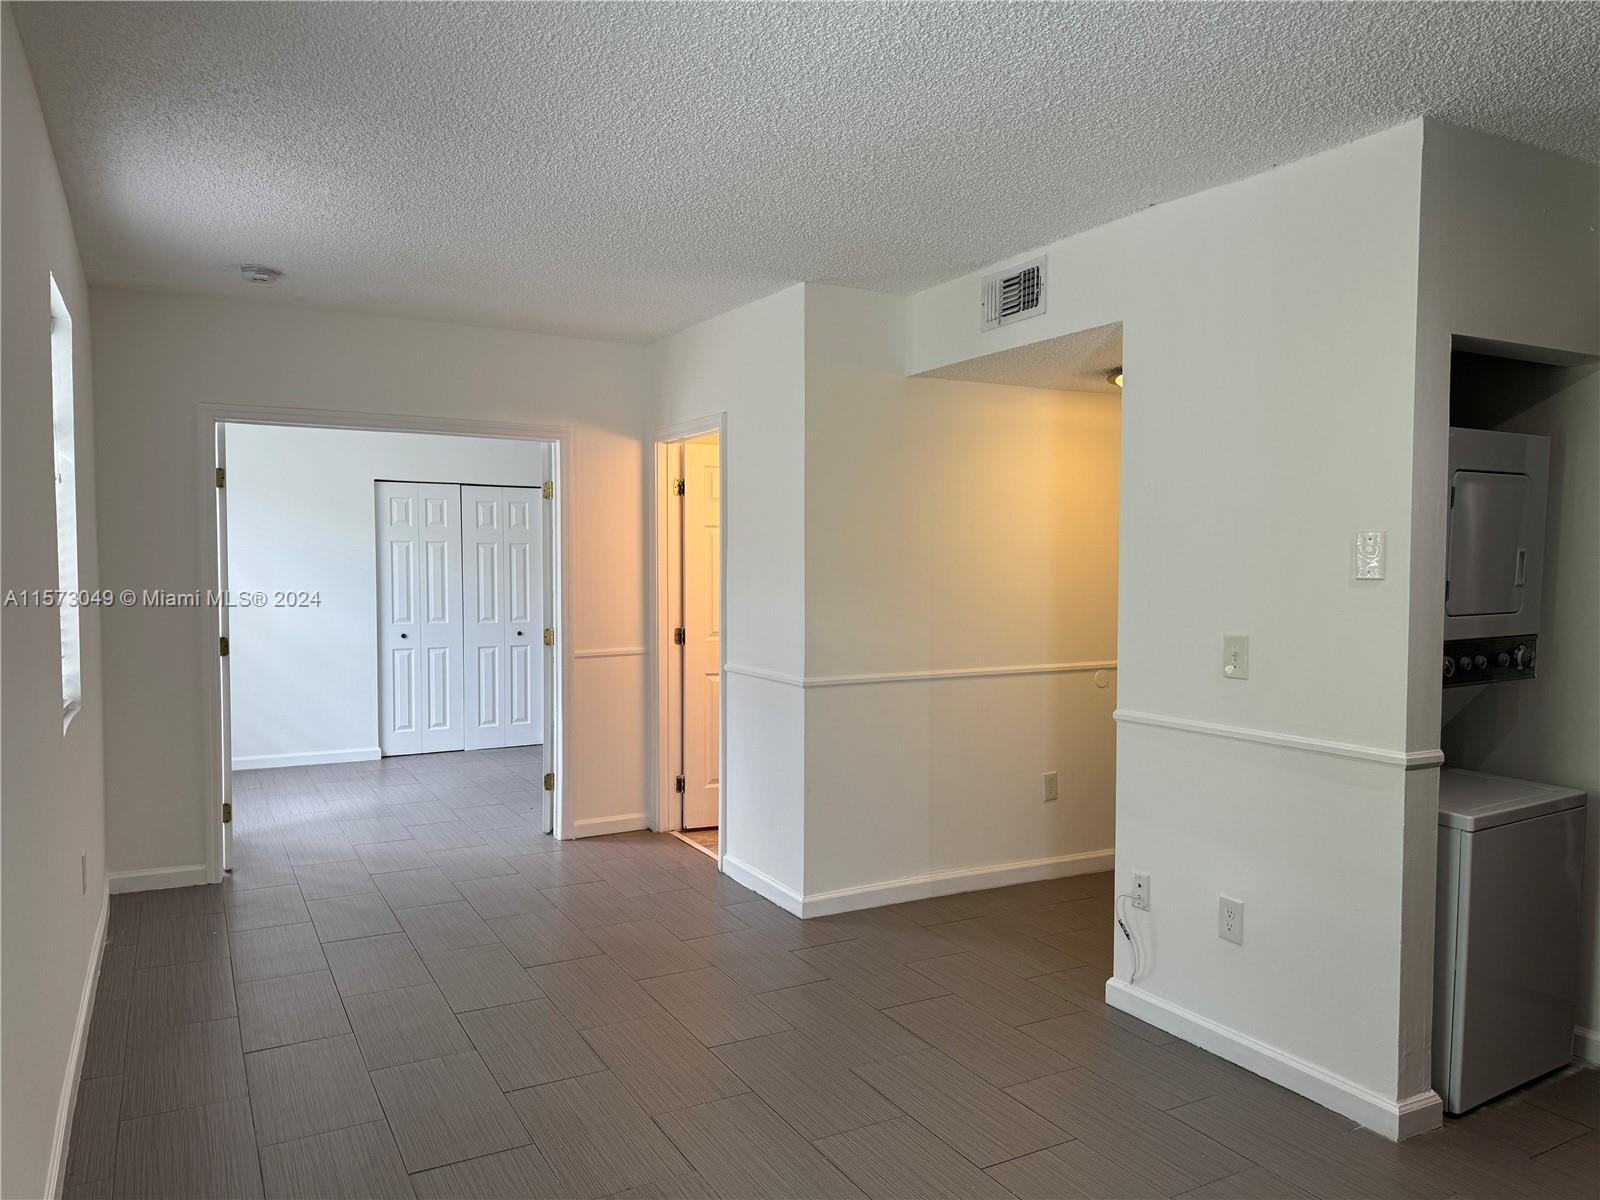 Rental Property at 1008 Jefferson Ave 203, Miami Beach, Miami-Dade County, Florida - Bedrooms: 2 
Bathrooms: 1  - $3,100 MO.